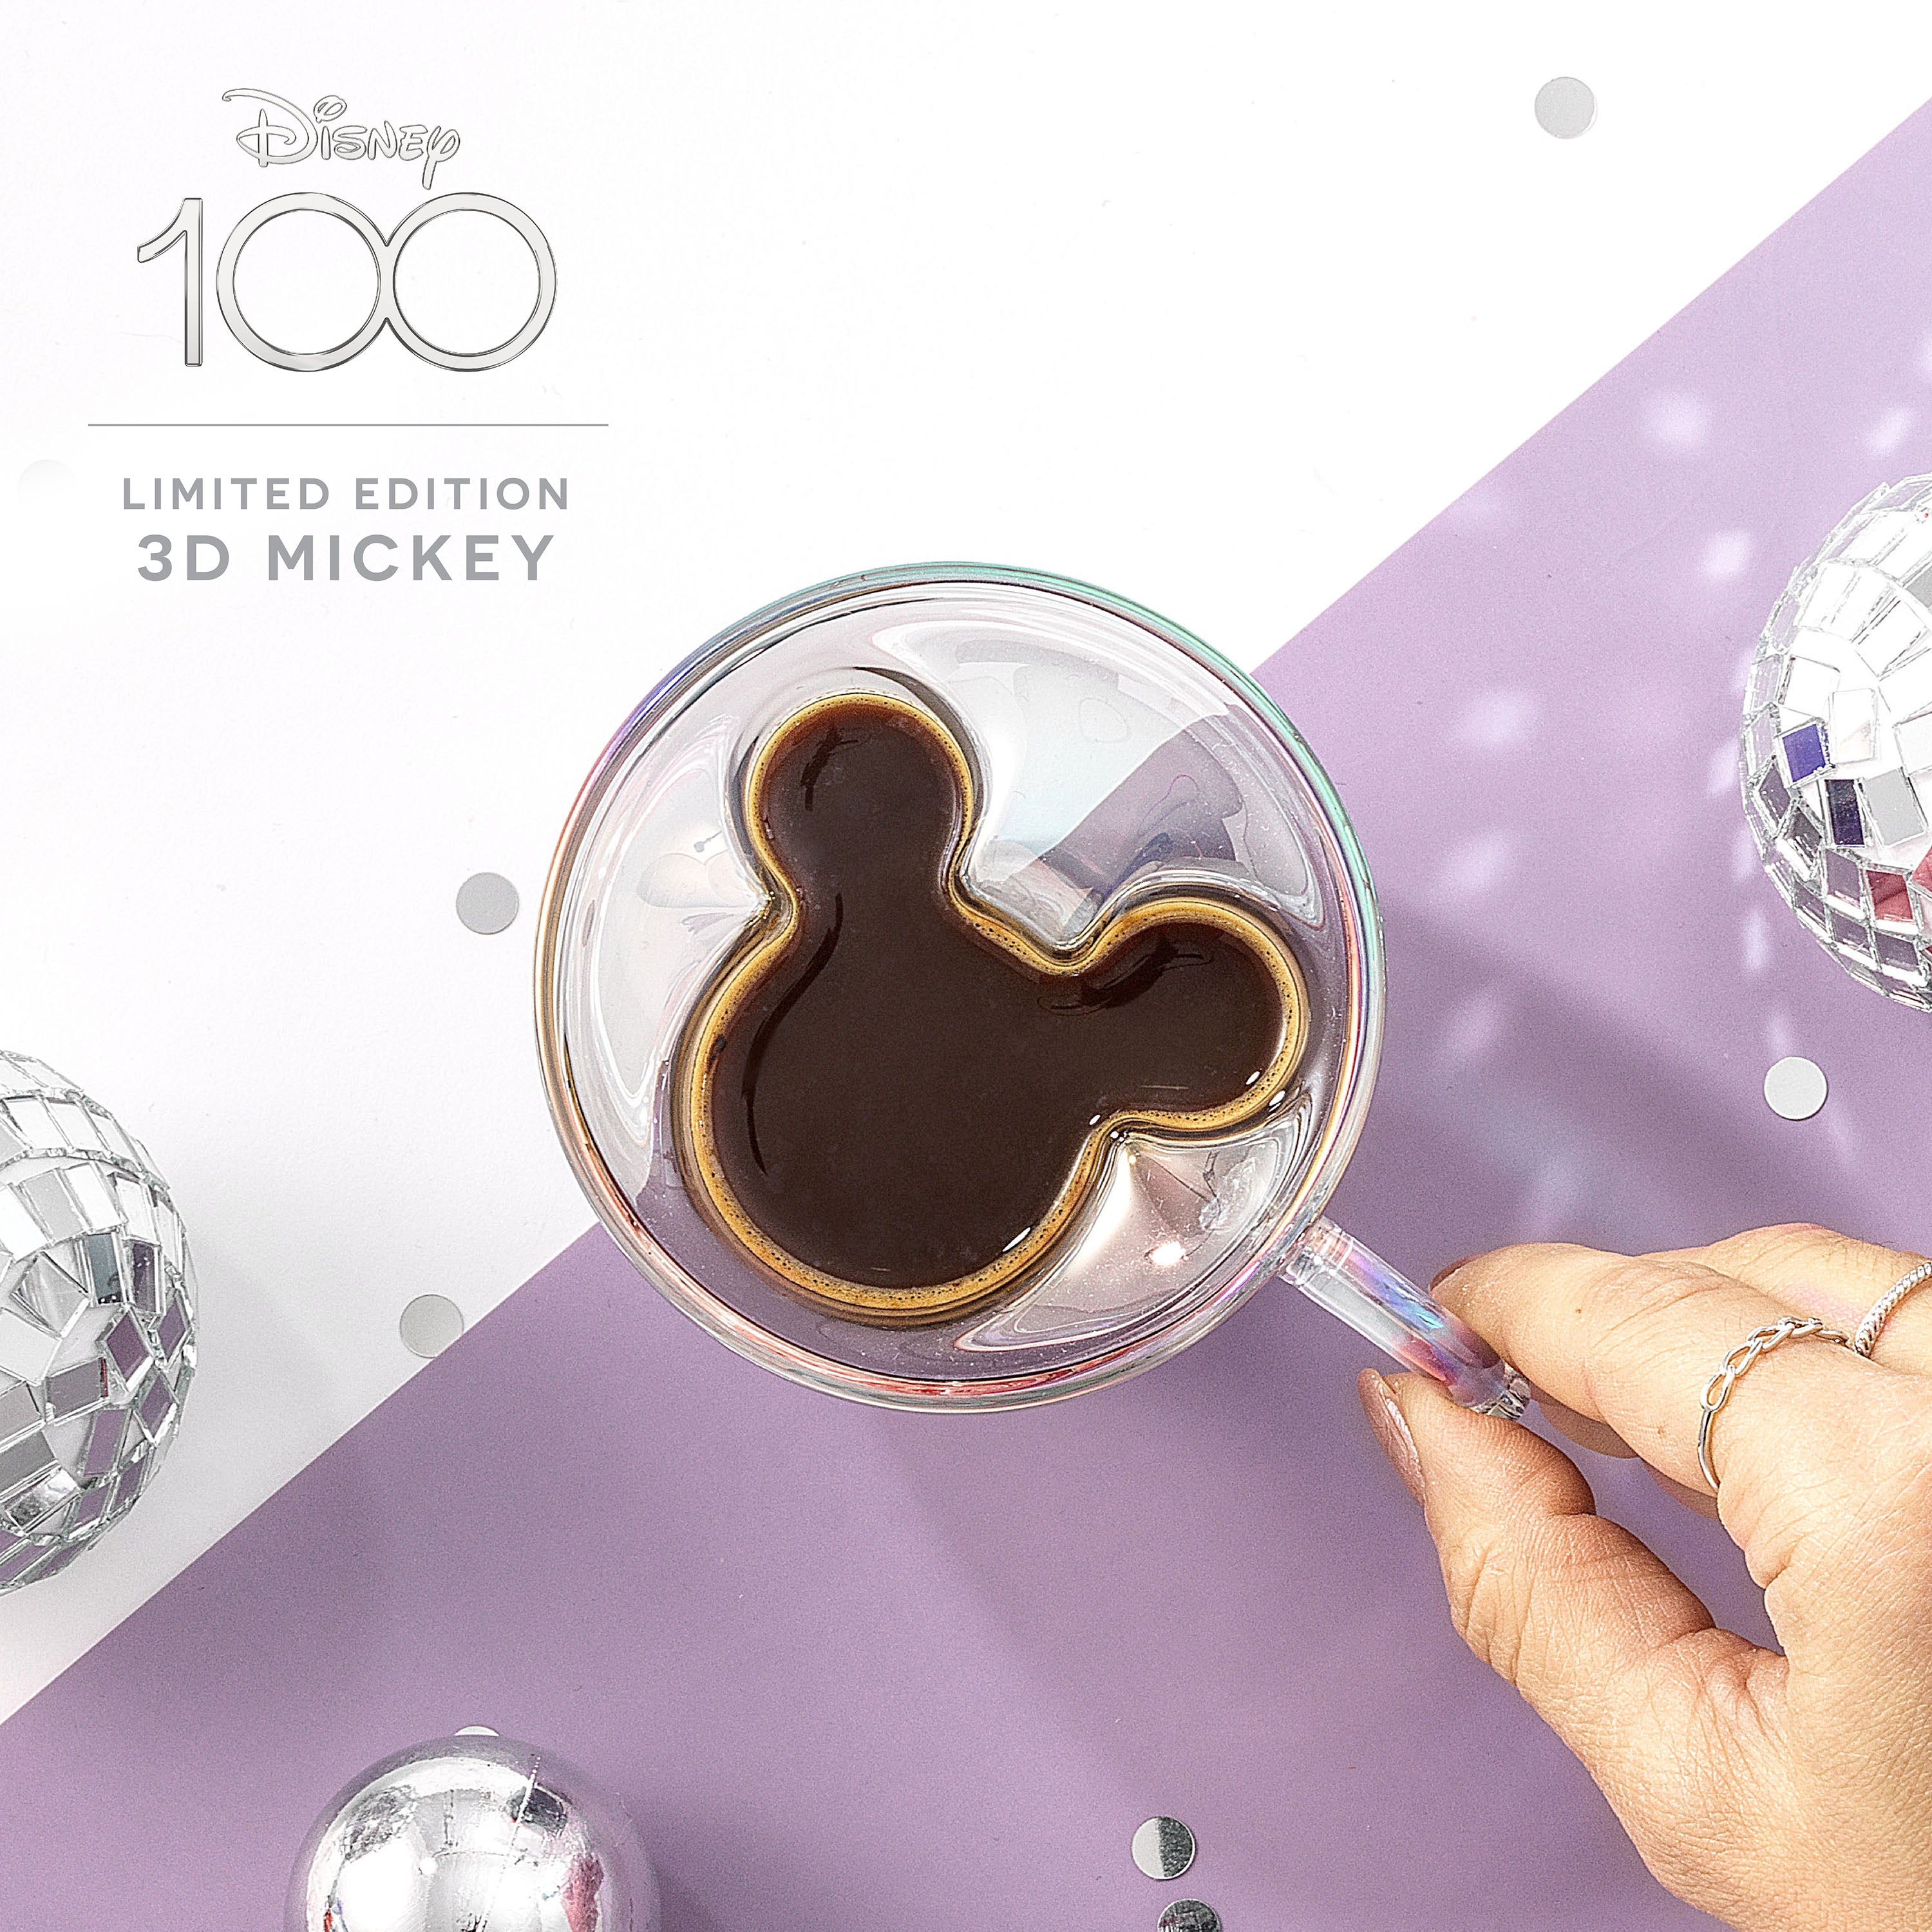 Disney100 5.4oz 3D Mickey Double Wall Espresso